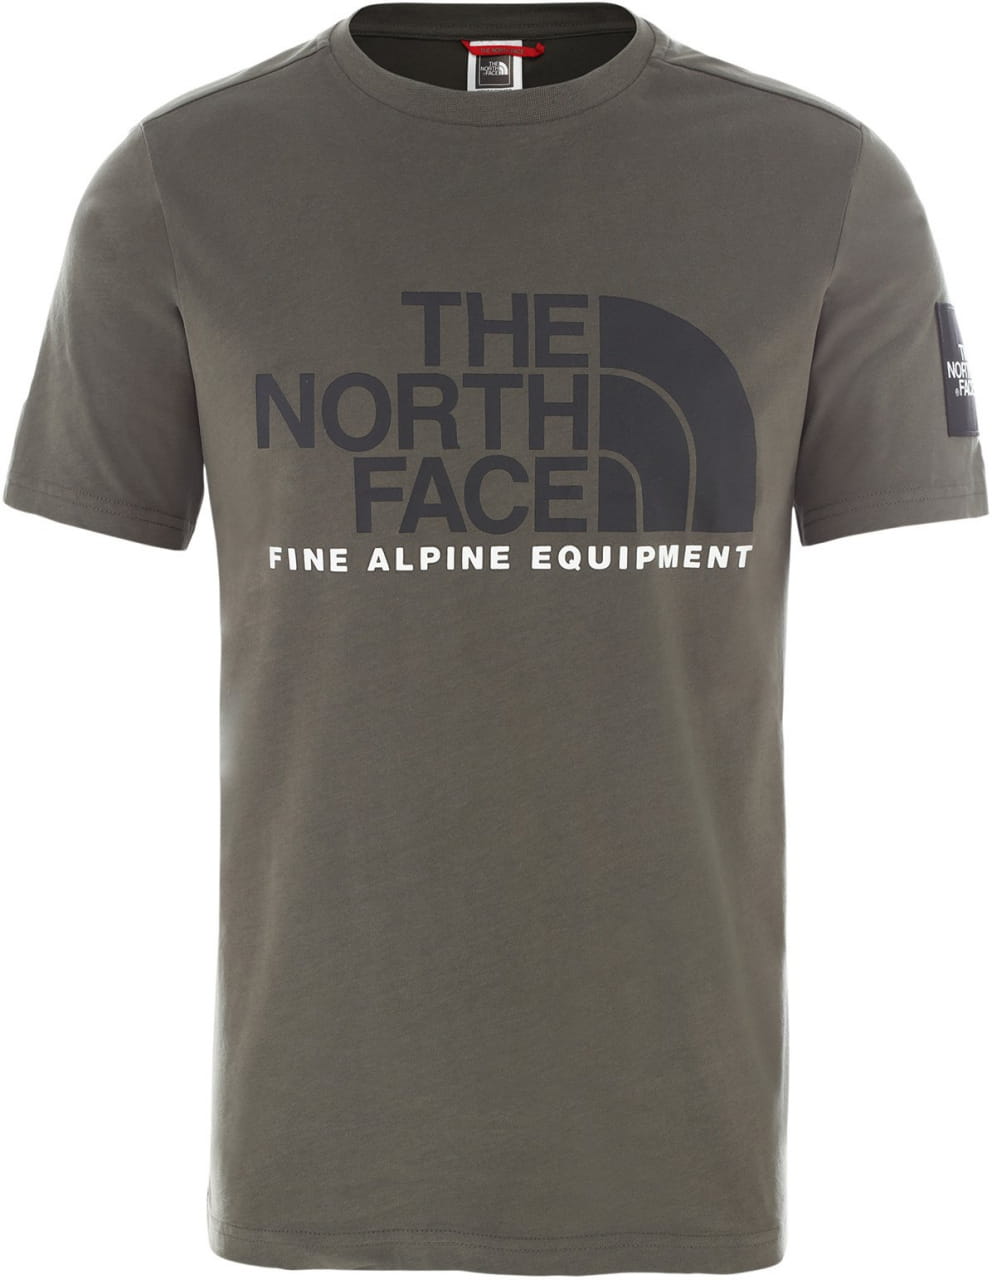 T-Shirts The North Face Men's Fine Alpine 2 T-Shirt